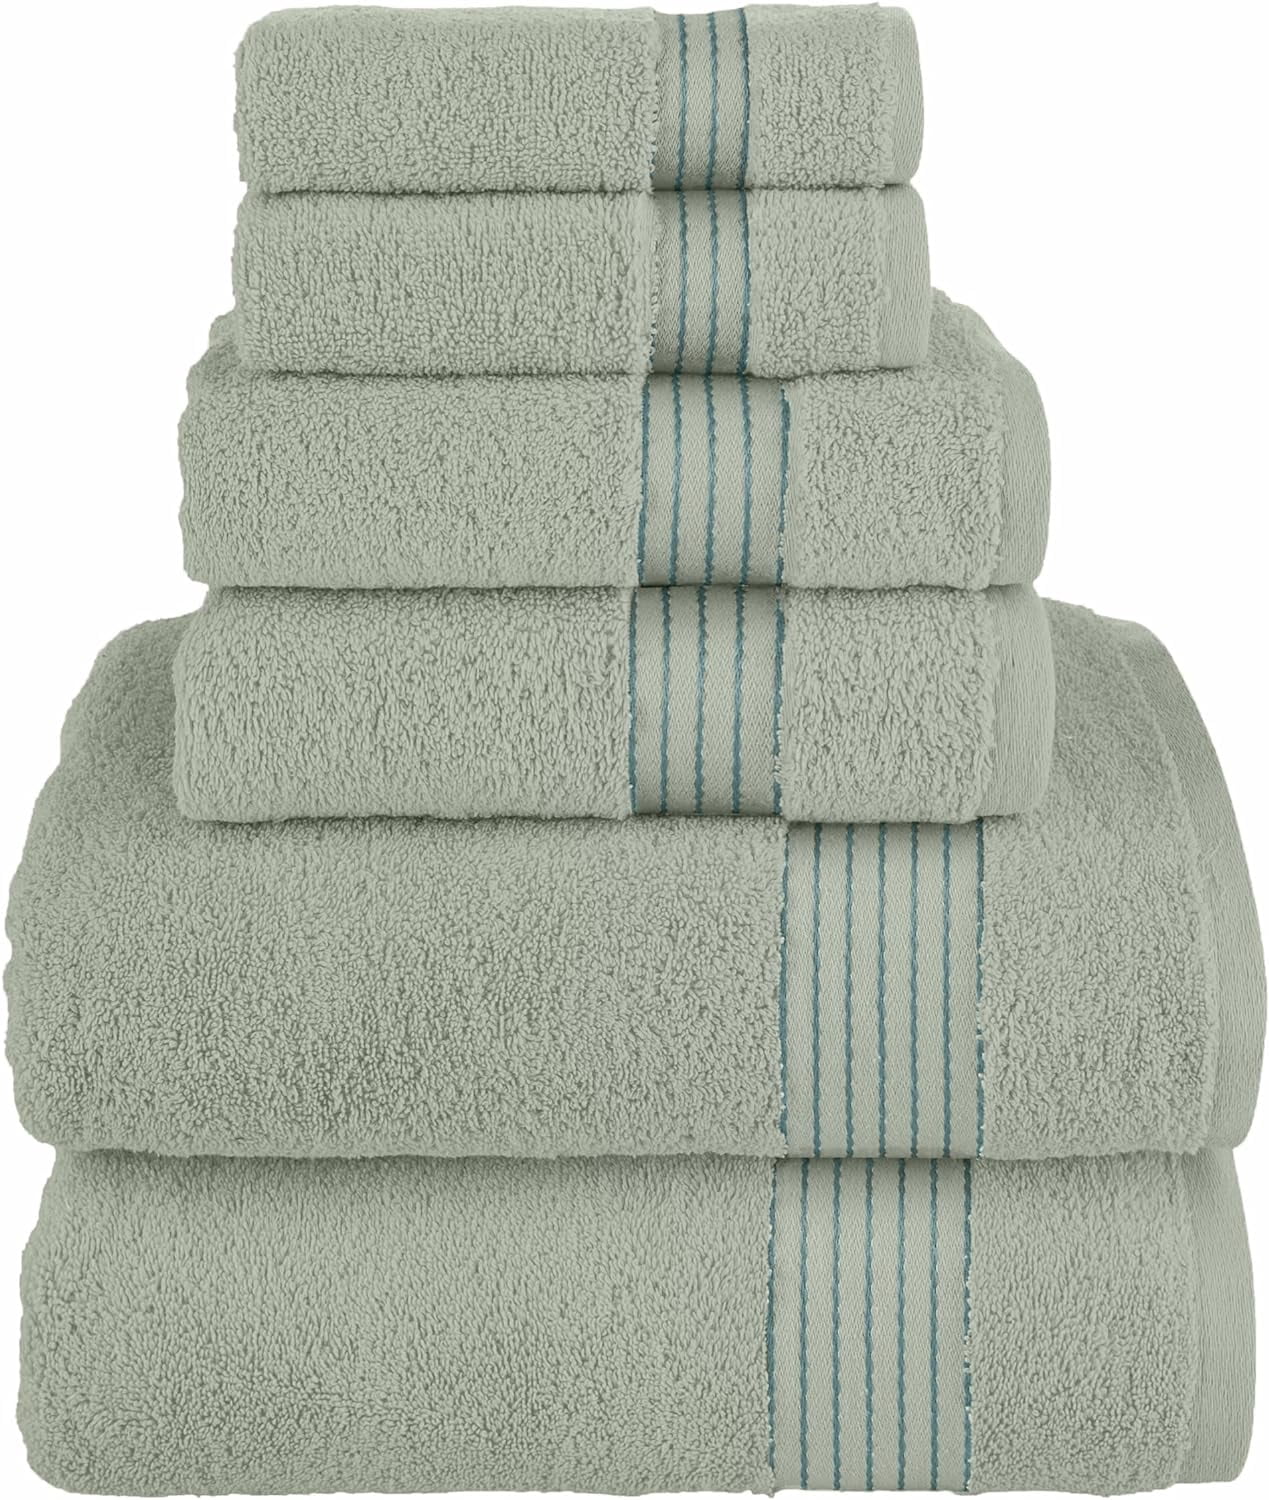 COZYART Sage Green Bath Towels Set for Bathroom Turkish Cotton Thick Soft  Absorbent Durable 650 GSM Towel Set of 6, 2 Large Bath Towels, 2 Hand